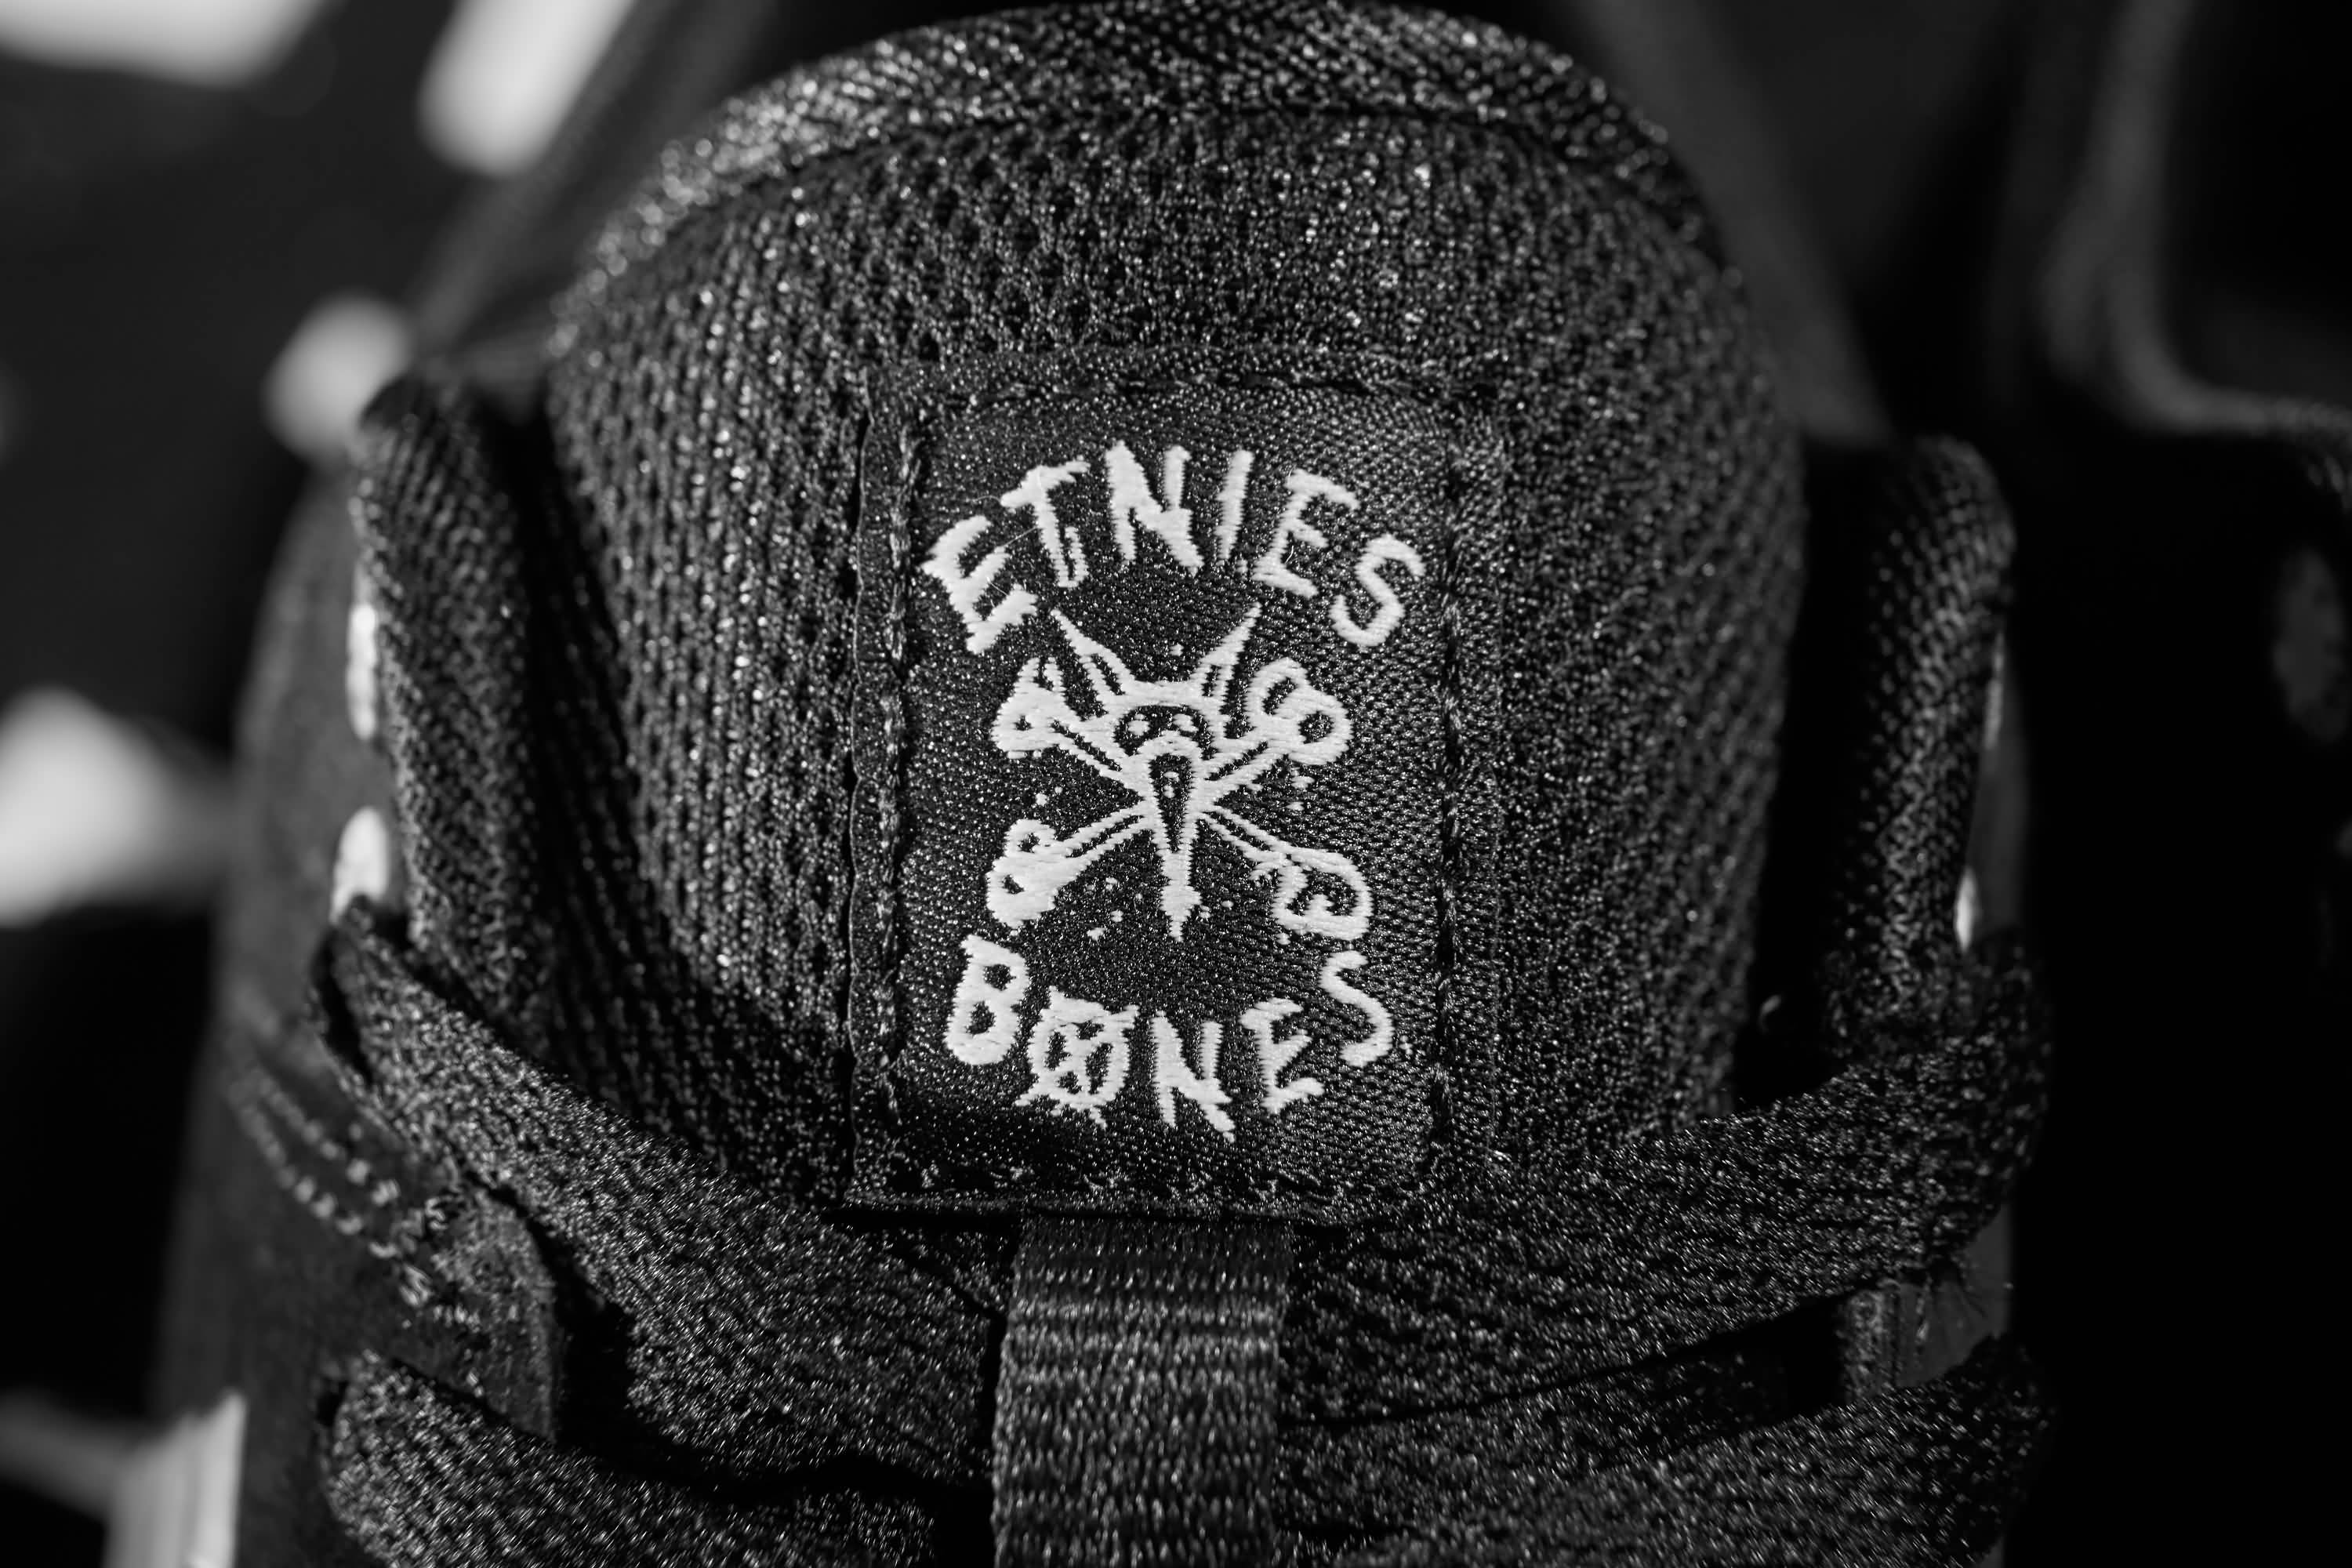 Etnies Skate X Bones Collaboration Skateboarding Shoes